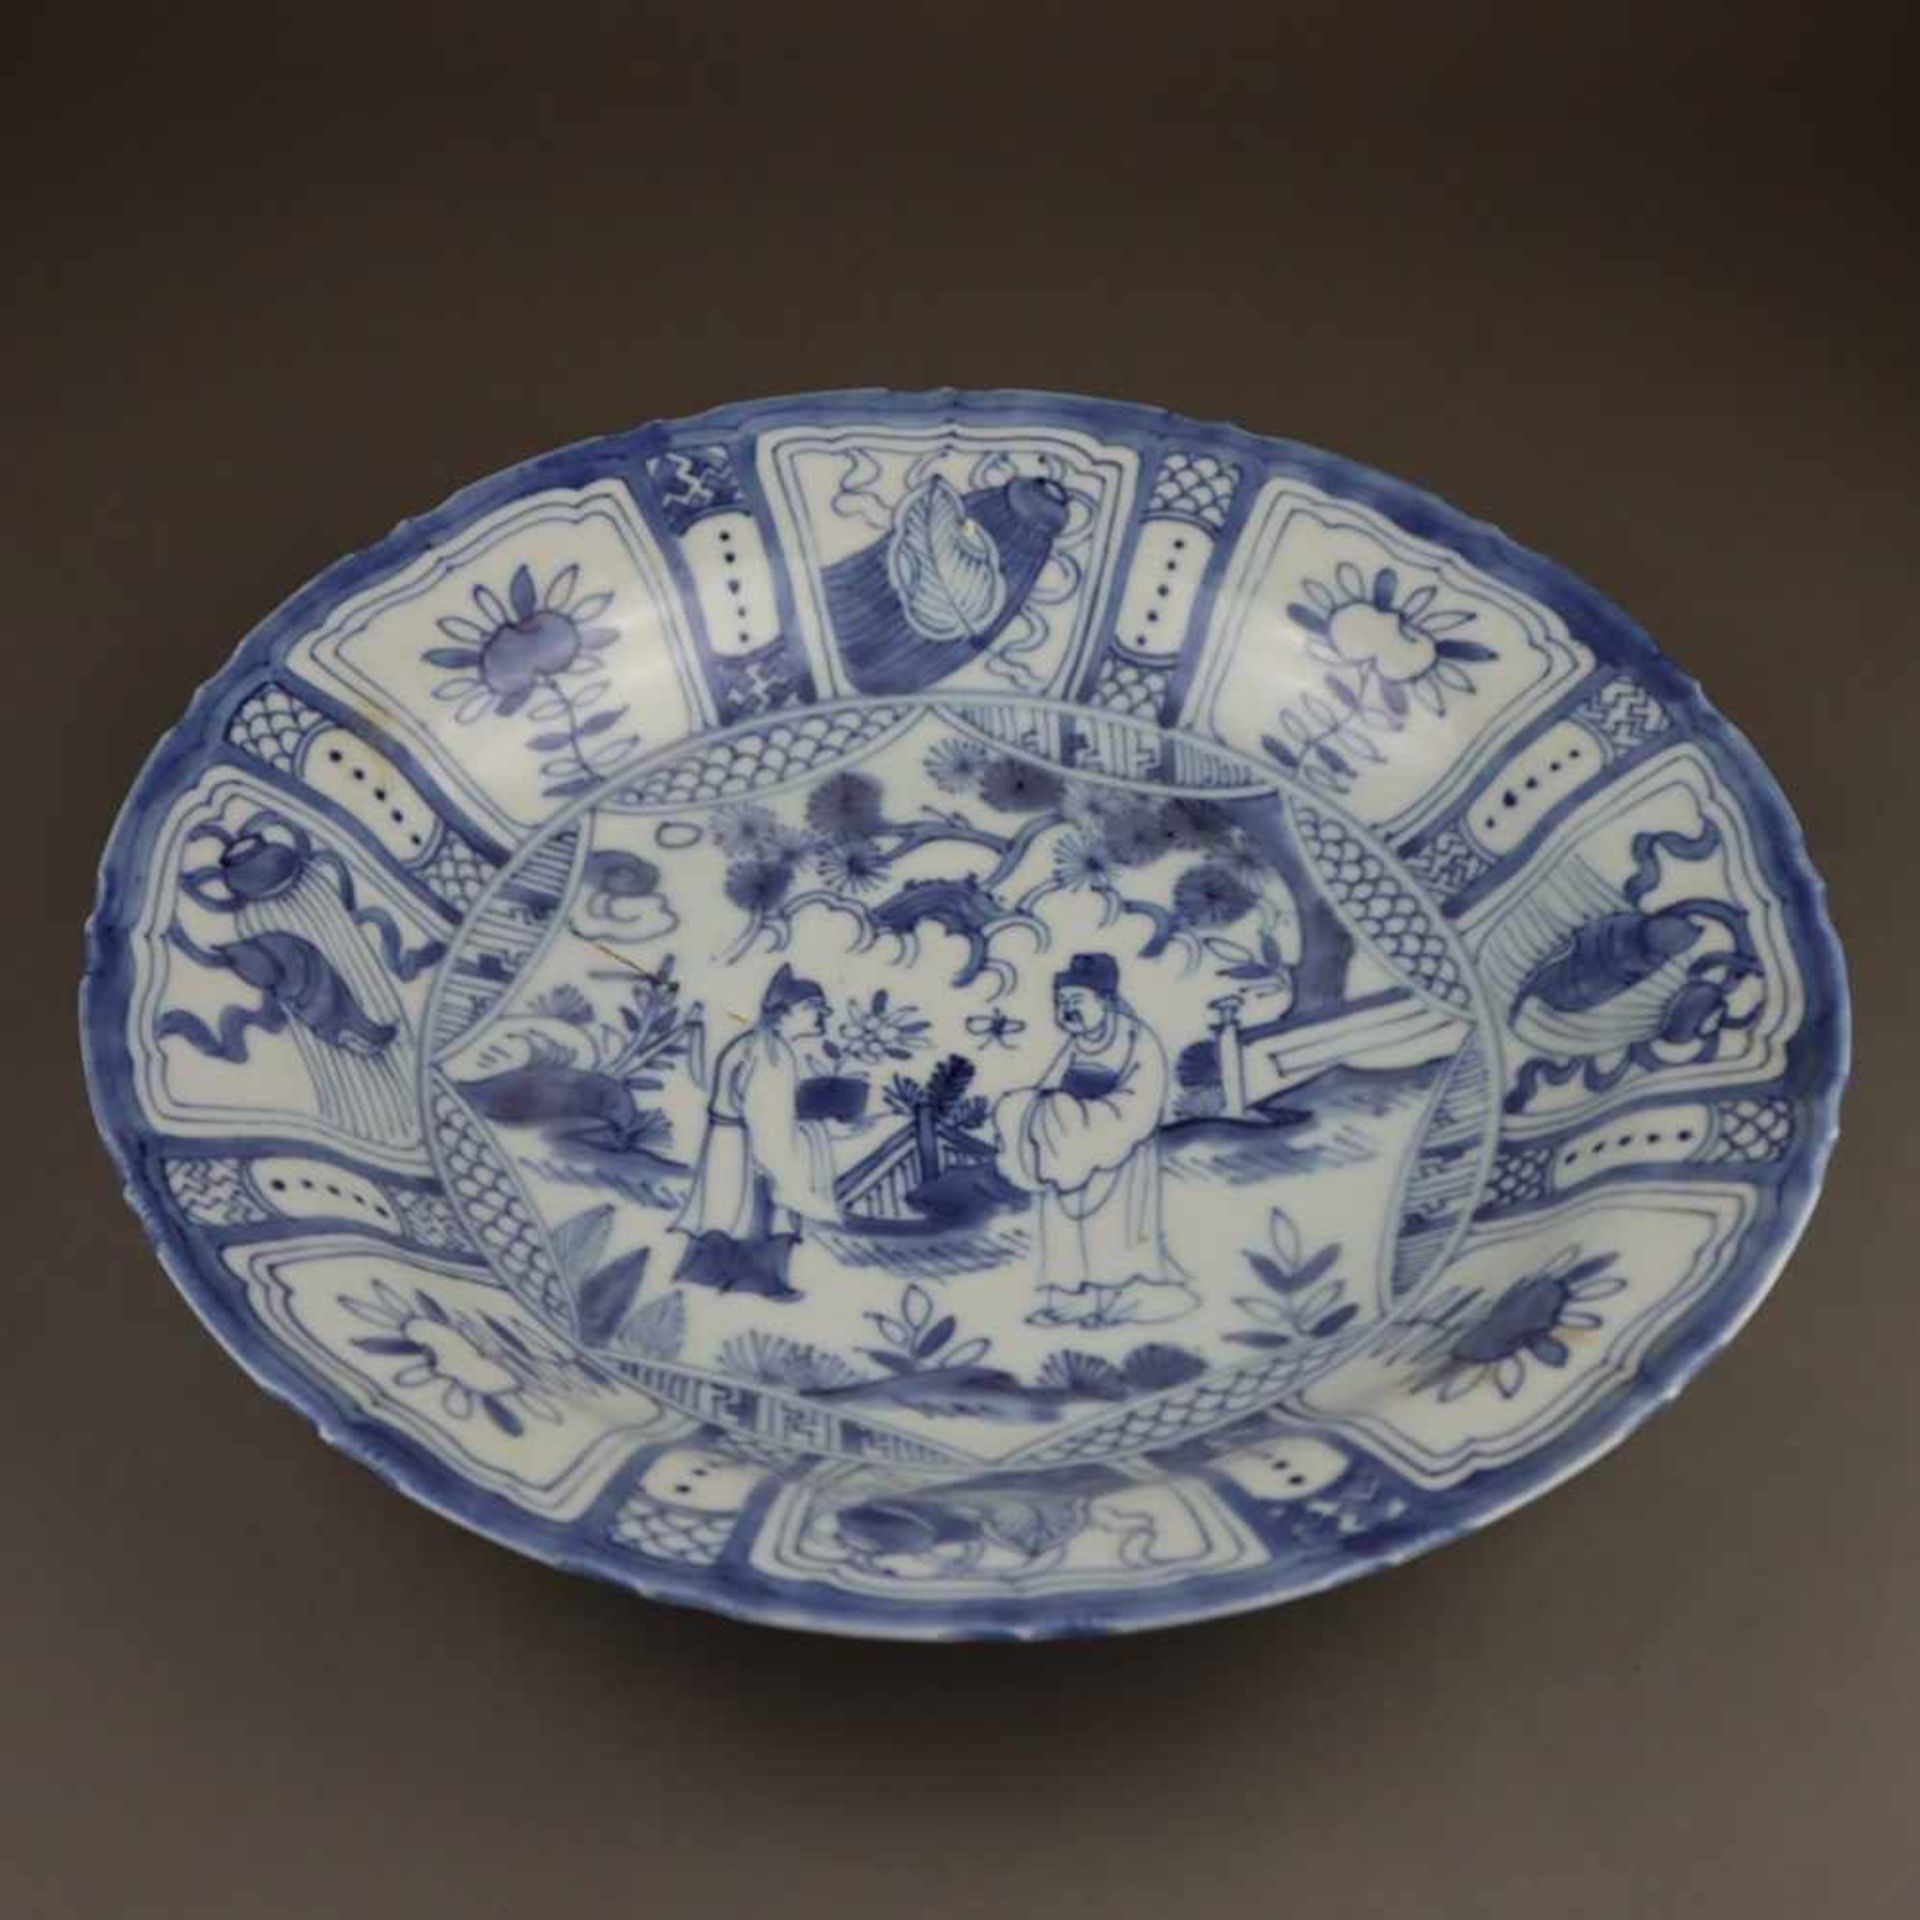 Blue and white plate - China, Qing dynasty, slightly waved round shape, porcelain lavishly painted